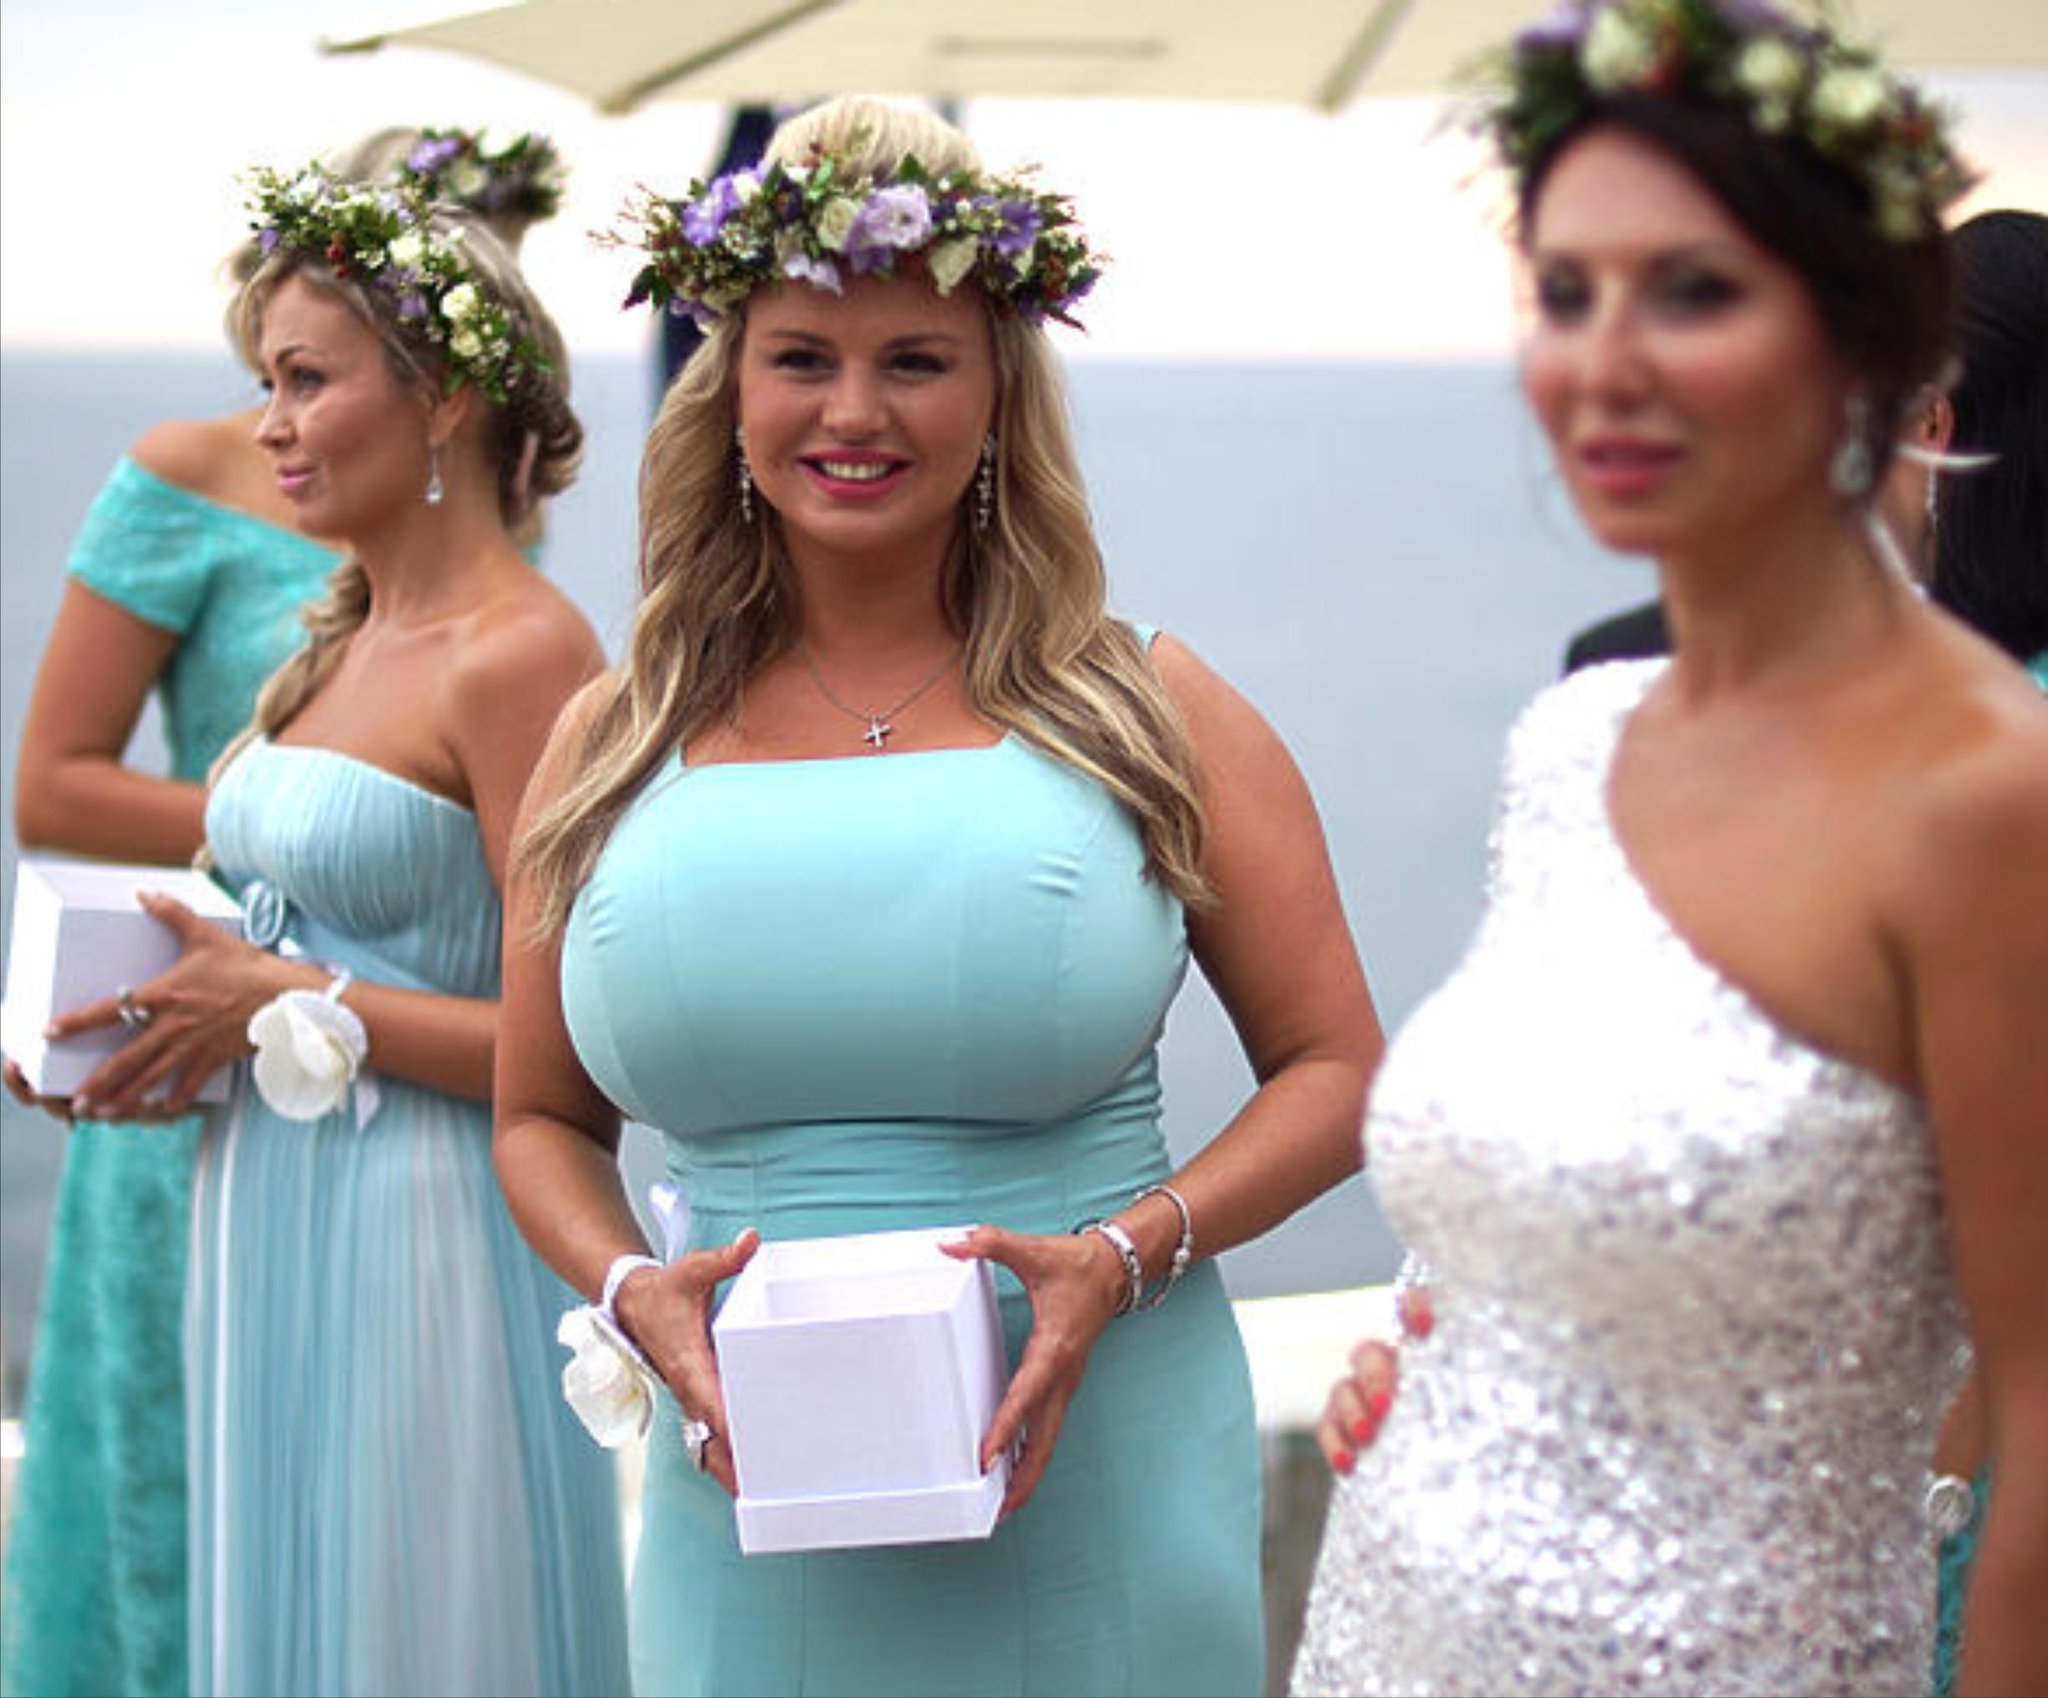 barbara greely share huge tits wedding dress photos